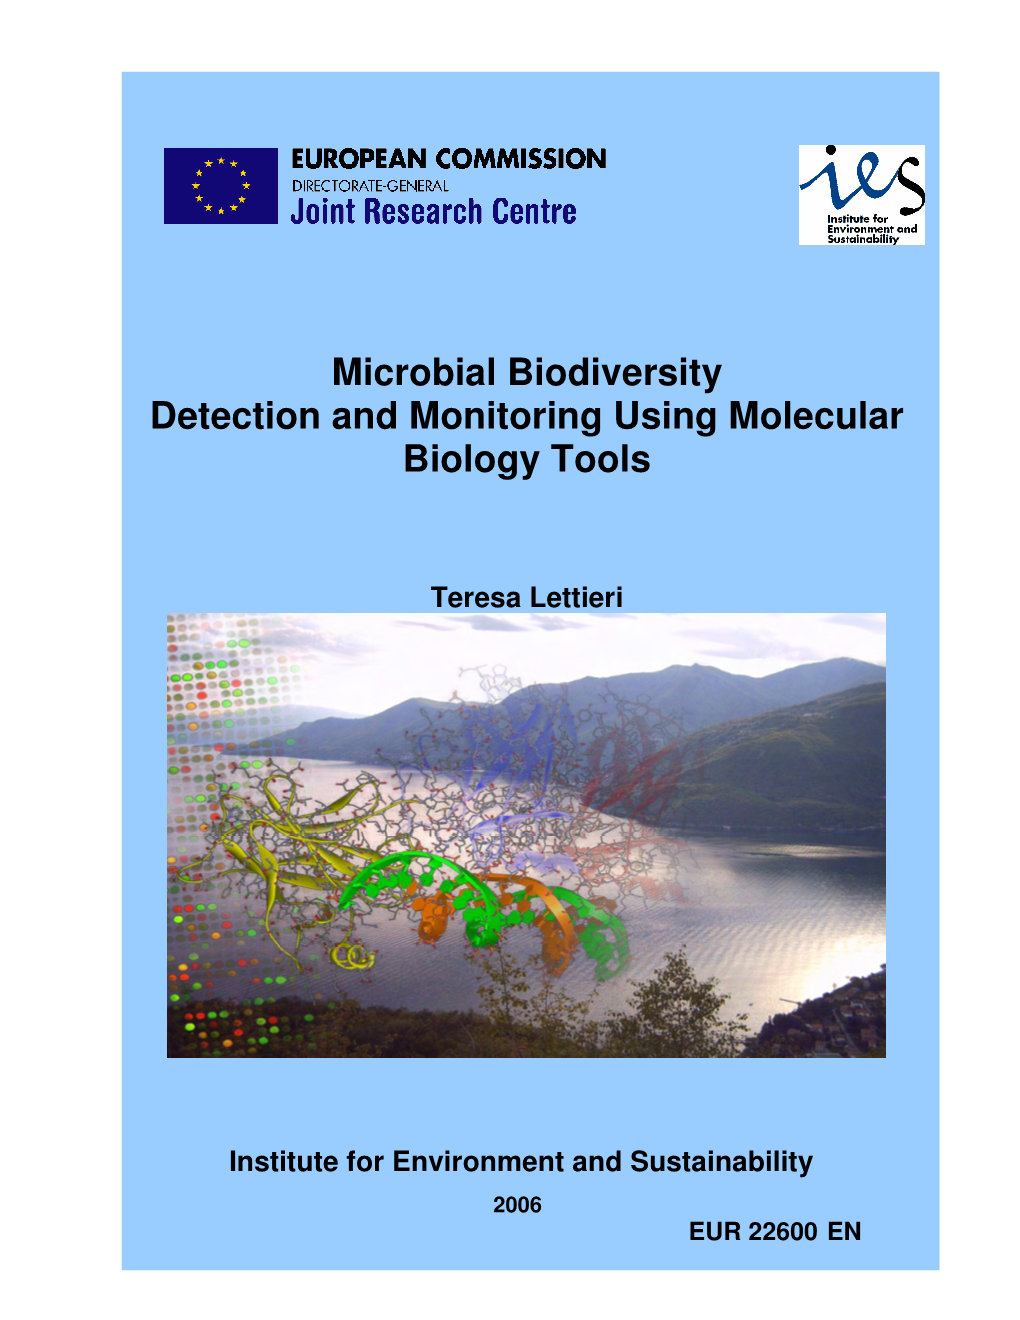 Microbial Biodiversity Detection and Monitoring Using Molecular Biology Tools